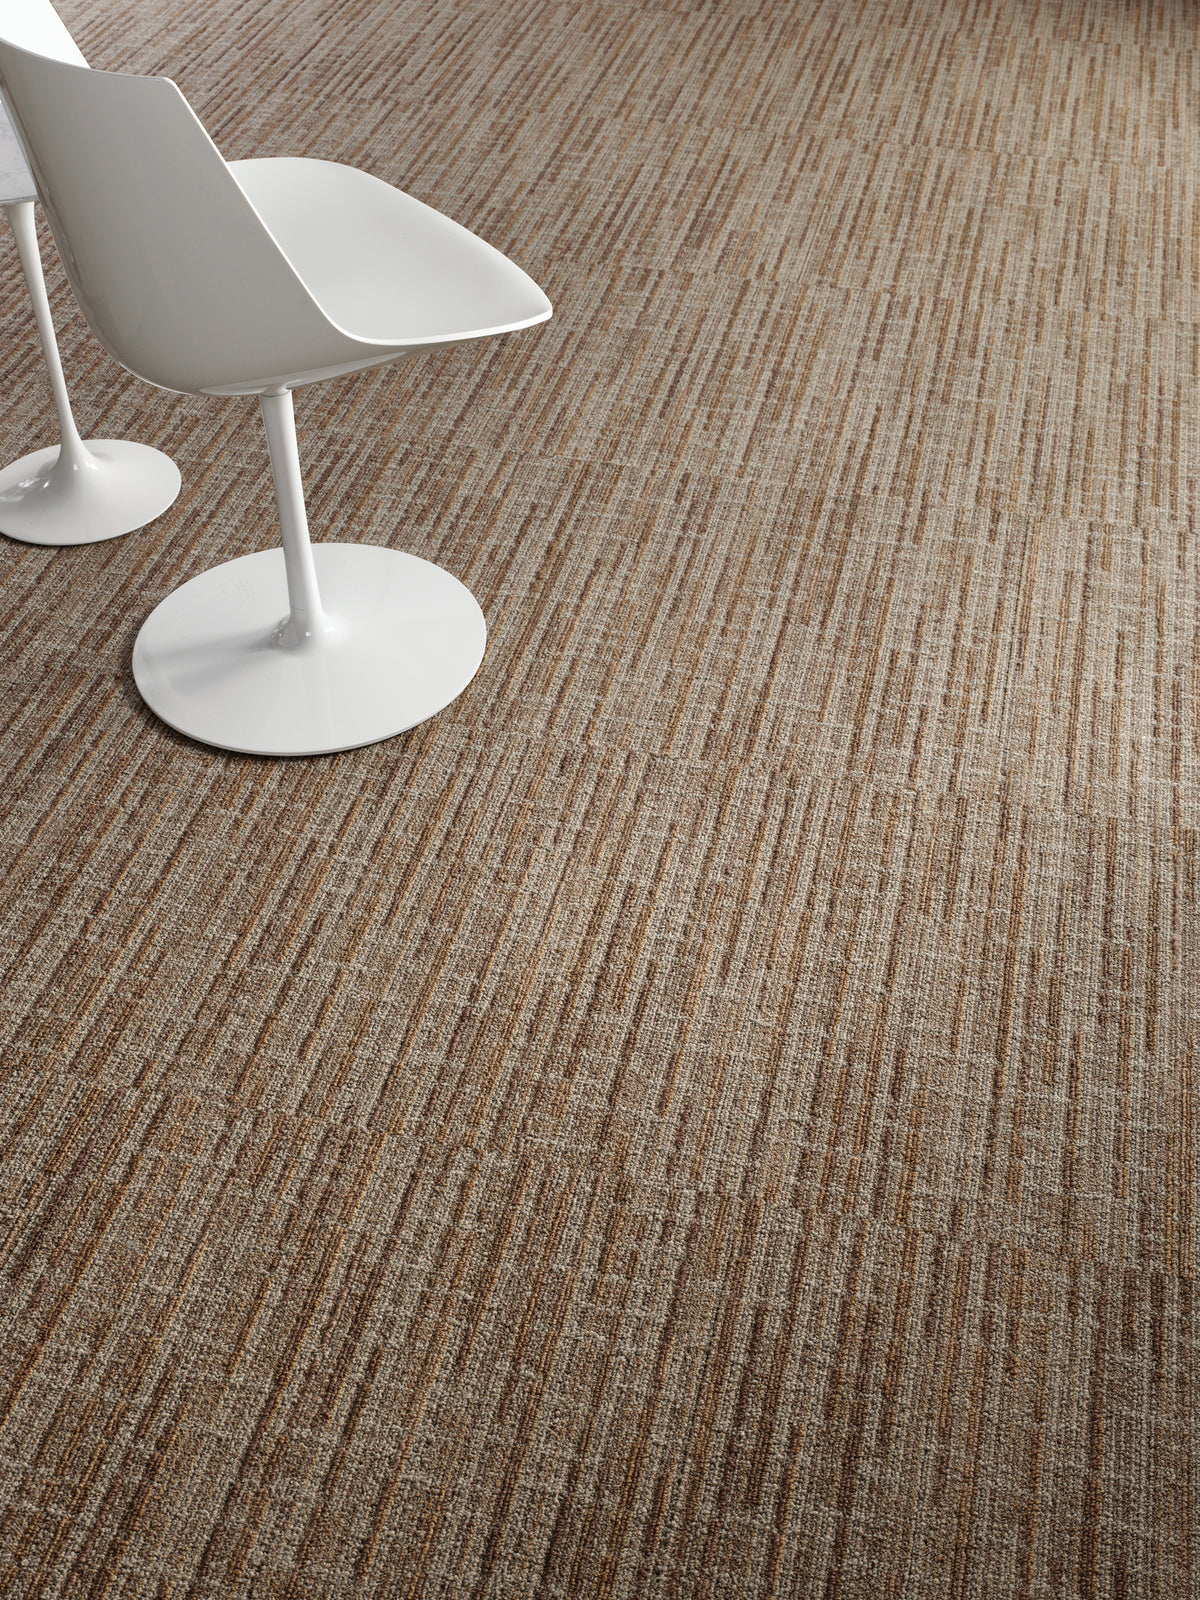 Mohawk Group - Mind Over Matter - Forward Vision - Commercial Carpet Tile - Creativity